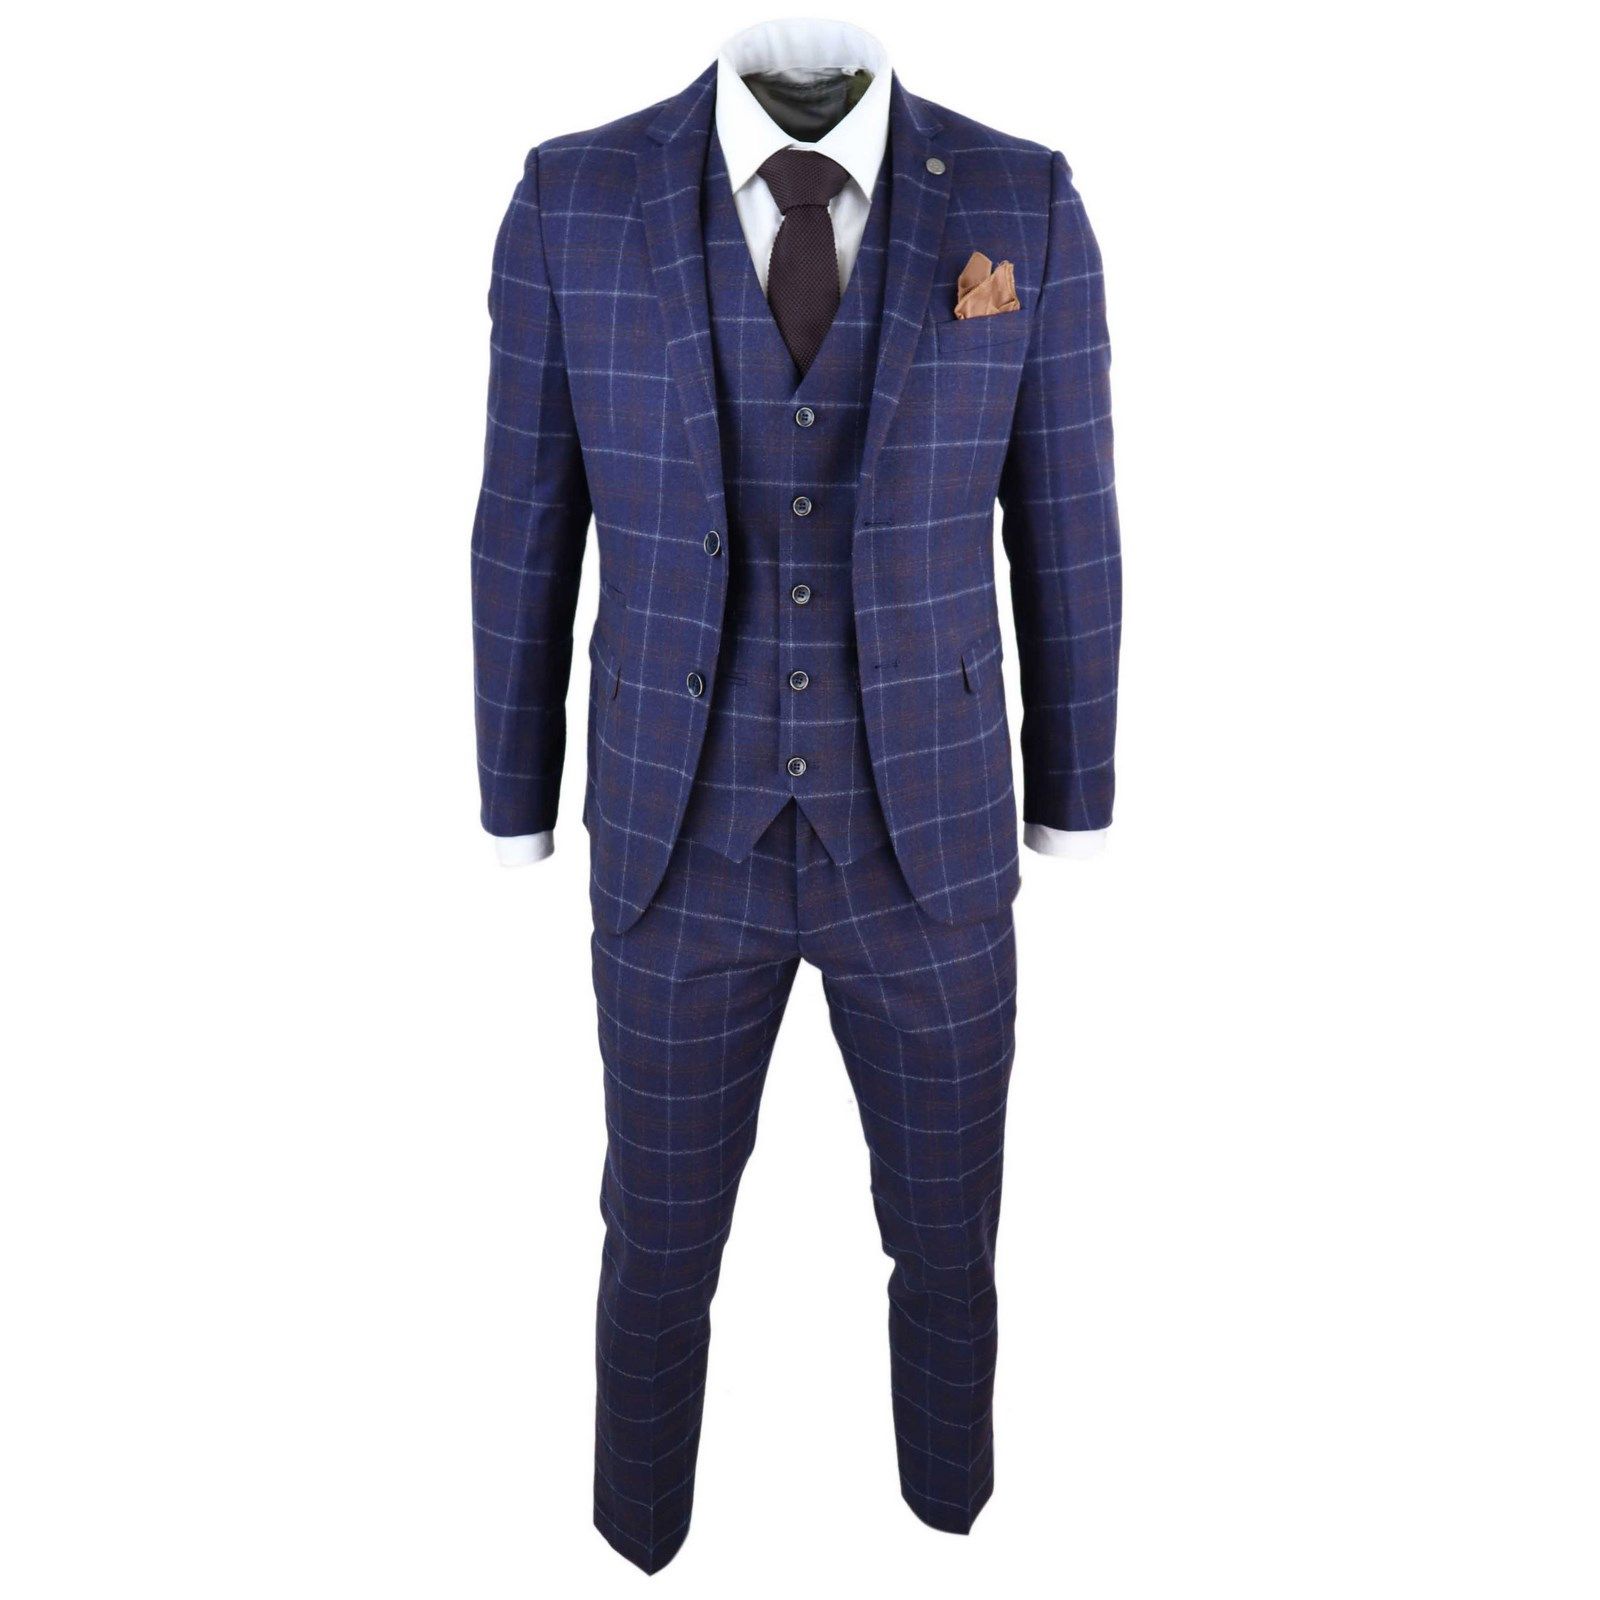 Men's Paul Andrew 3 Piece Navy Blue Textured Business Wedding Suit Tailored Fit 